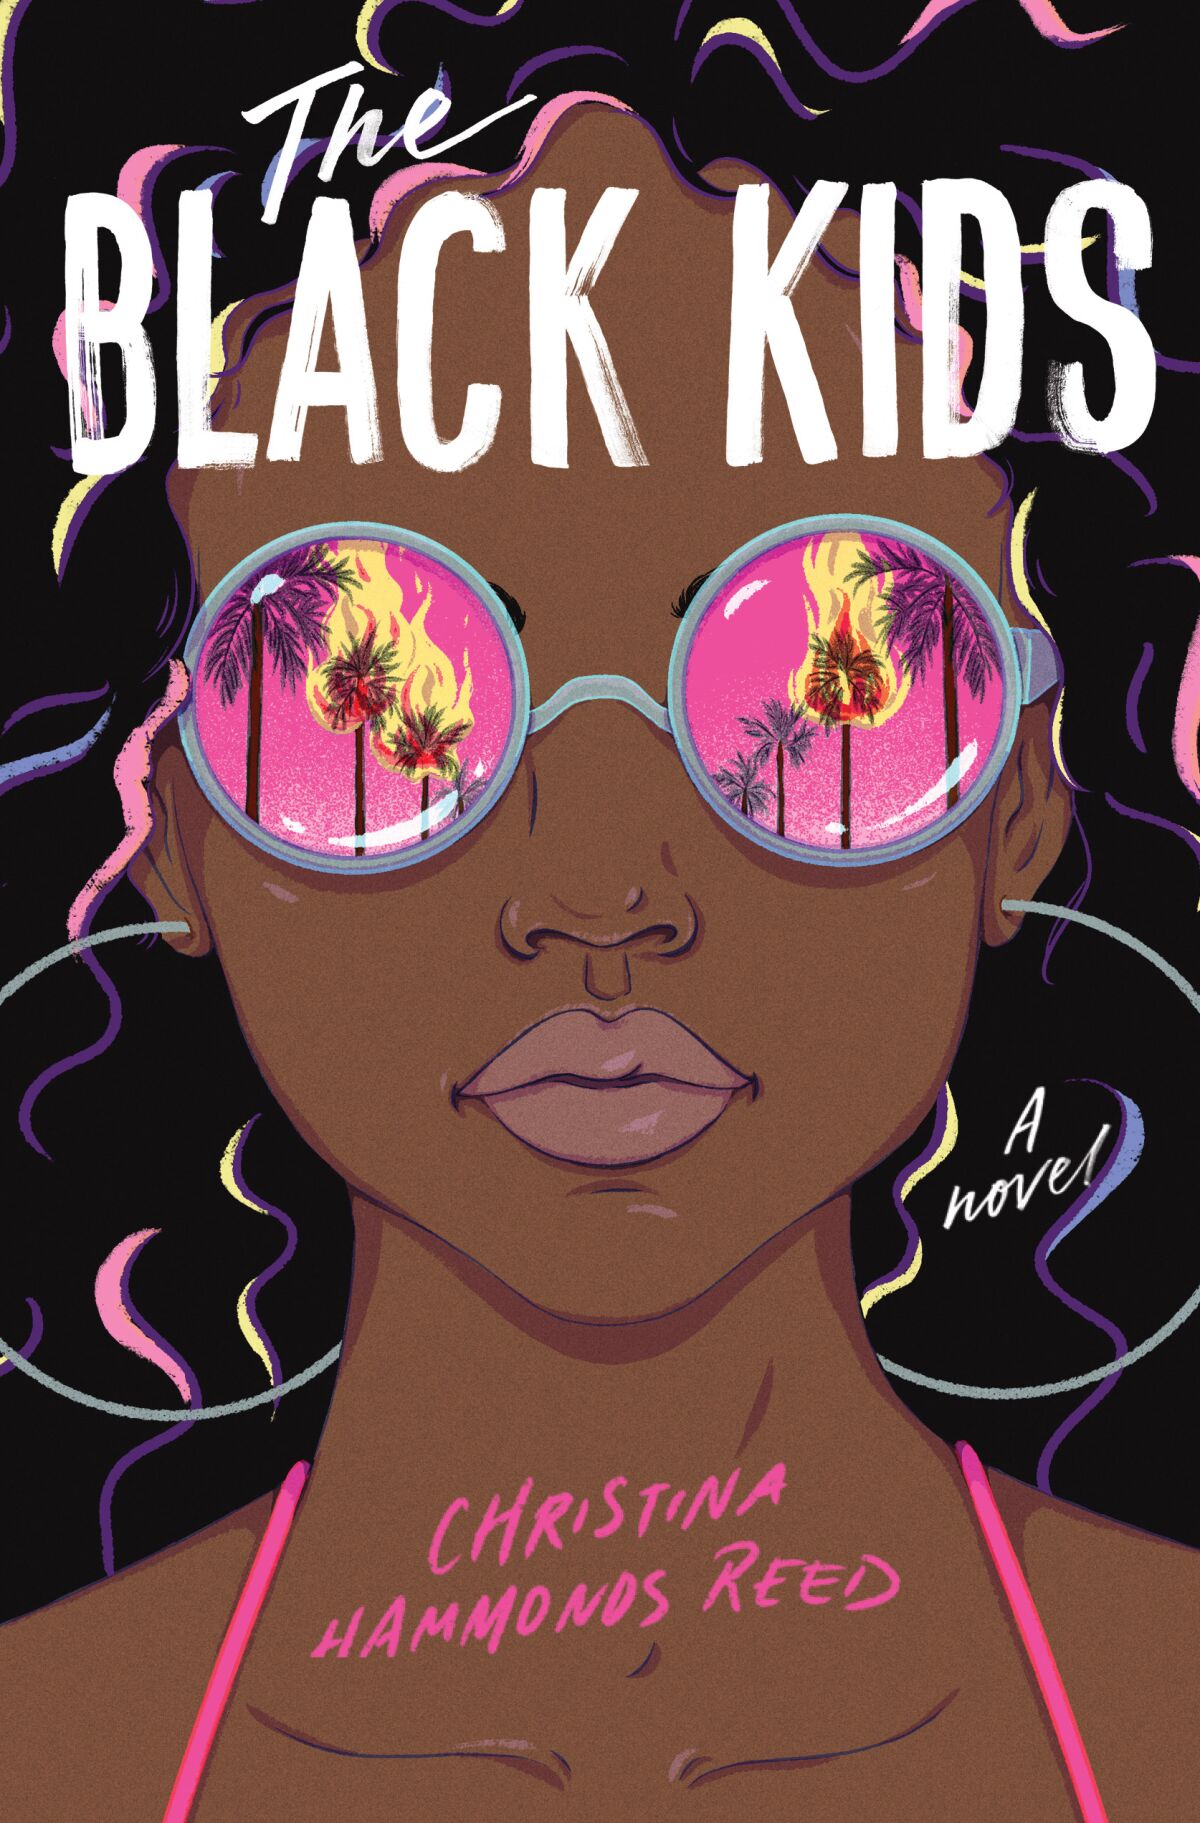 "The Black Kids" by Christina Hammonds Reed.